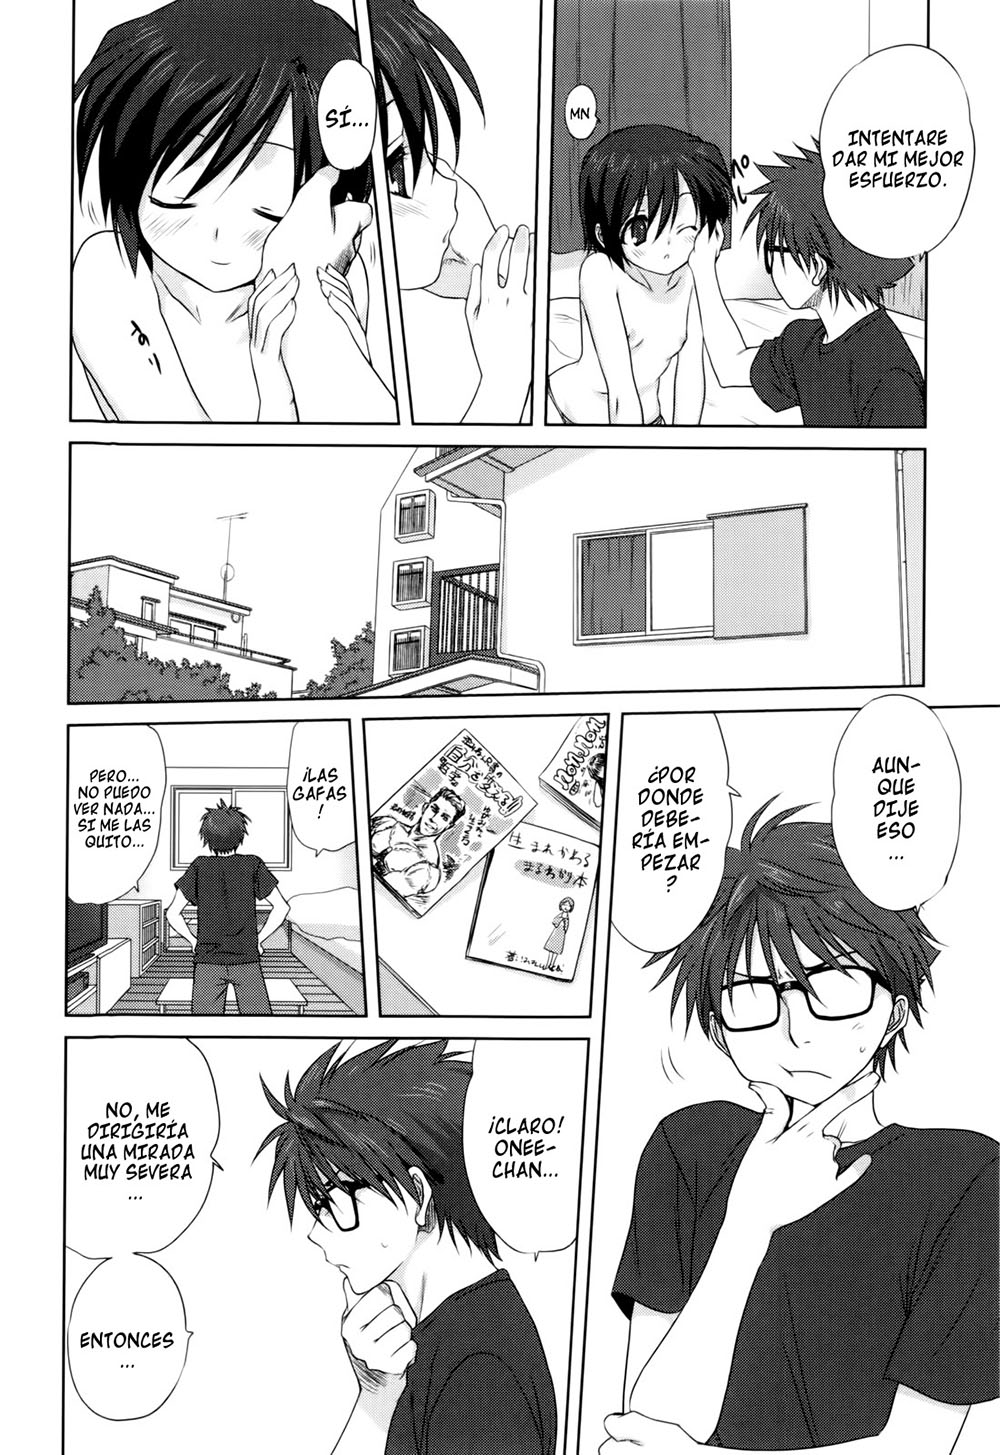 La Familia al Completo #2 - 5 - Comics Porno - Hentai Manga - Cartoon XXX